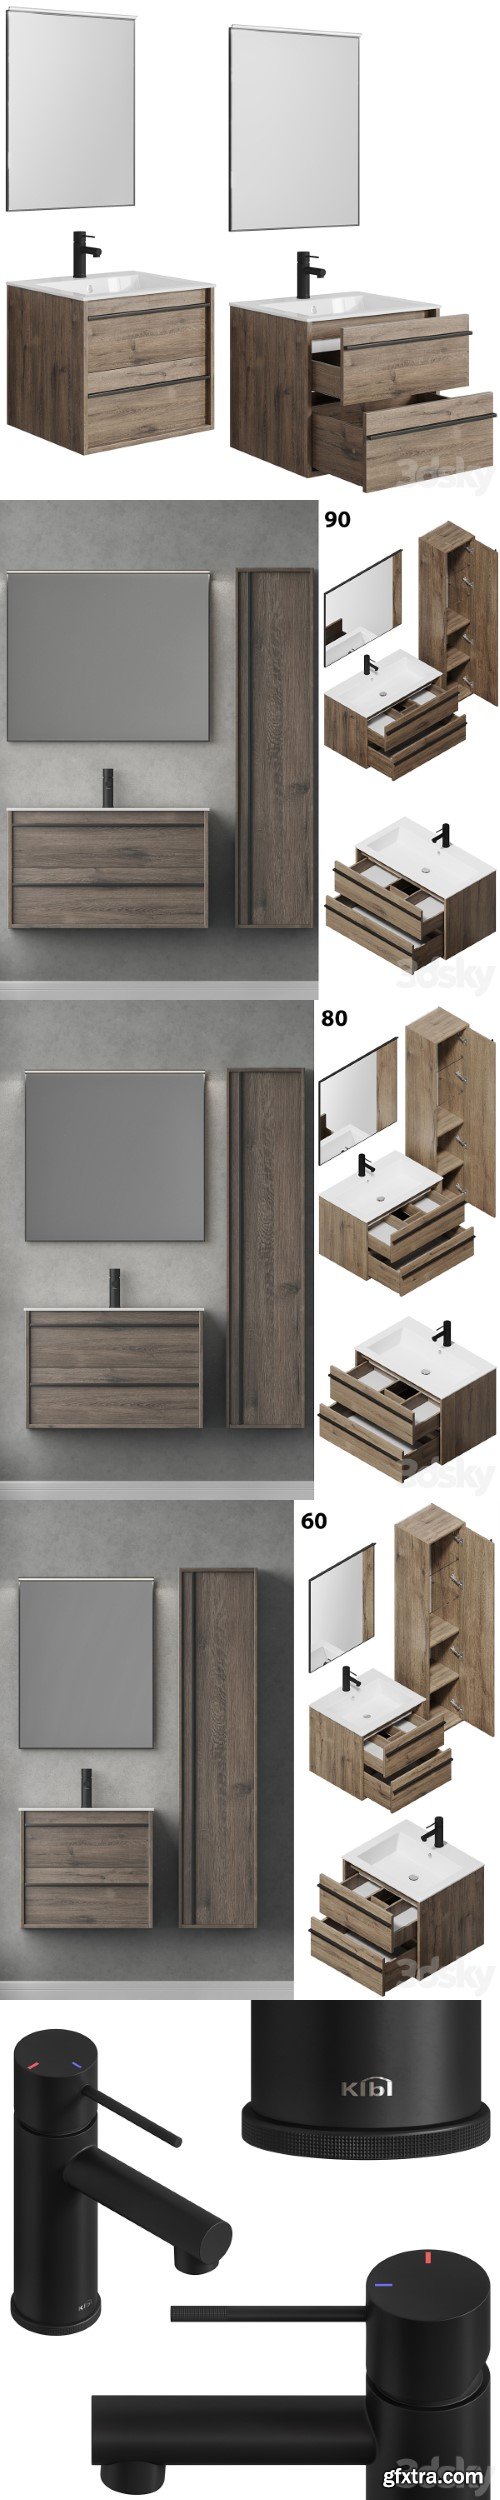 Furniture set Lino 60/70/80/90 and Pencil case | Vray+Corona